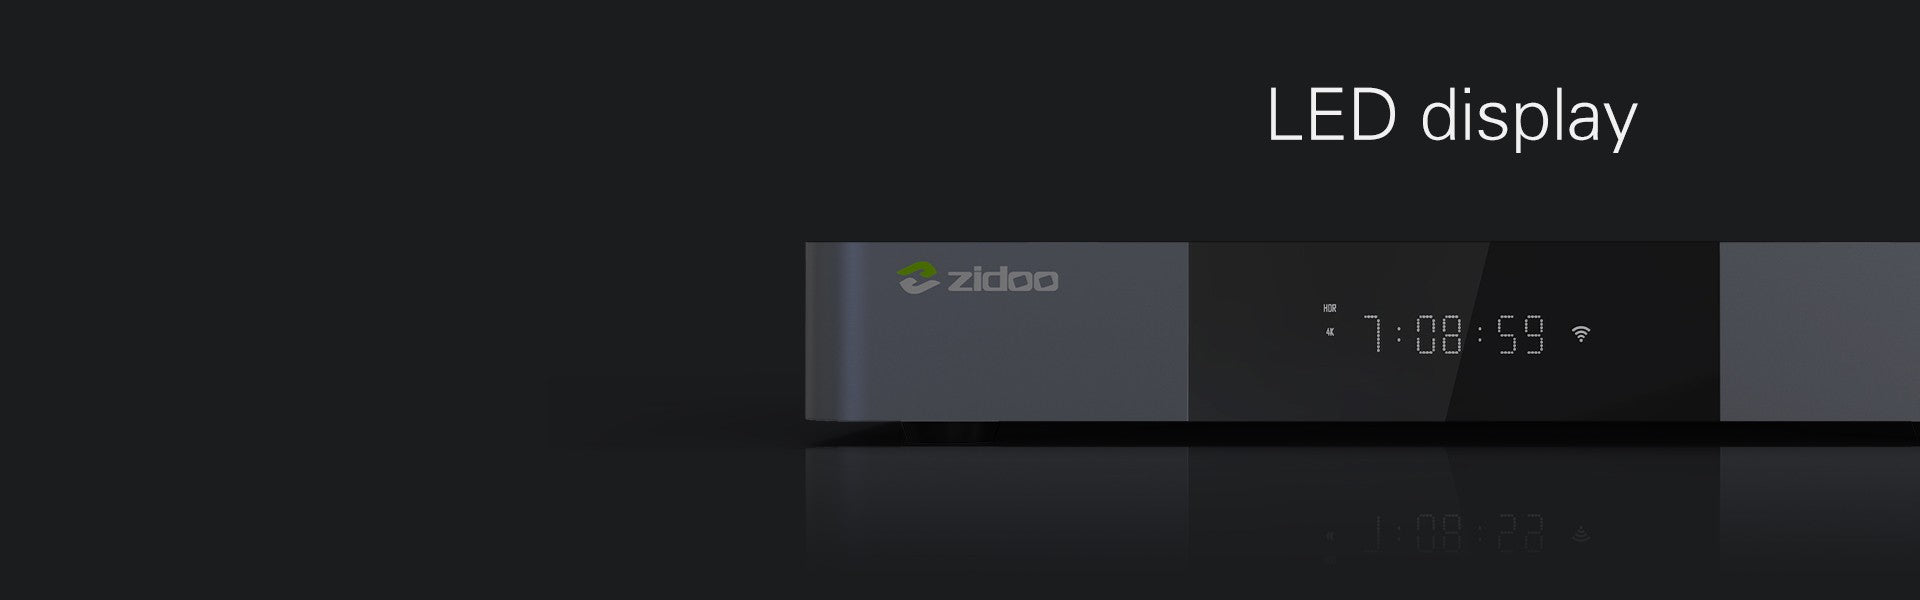 Zidoo Z9X - 4K UHD Media player